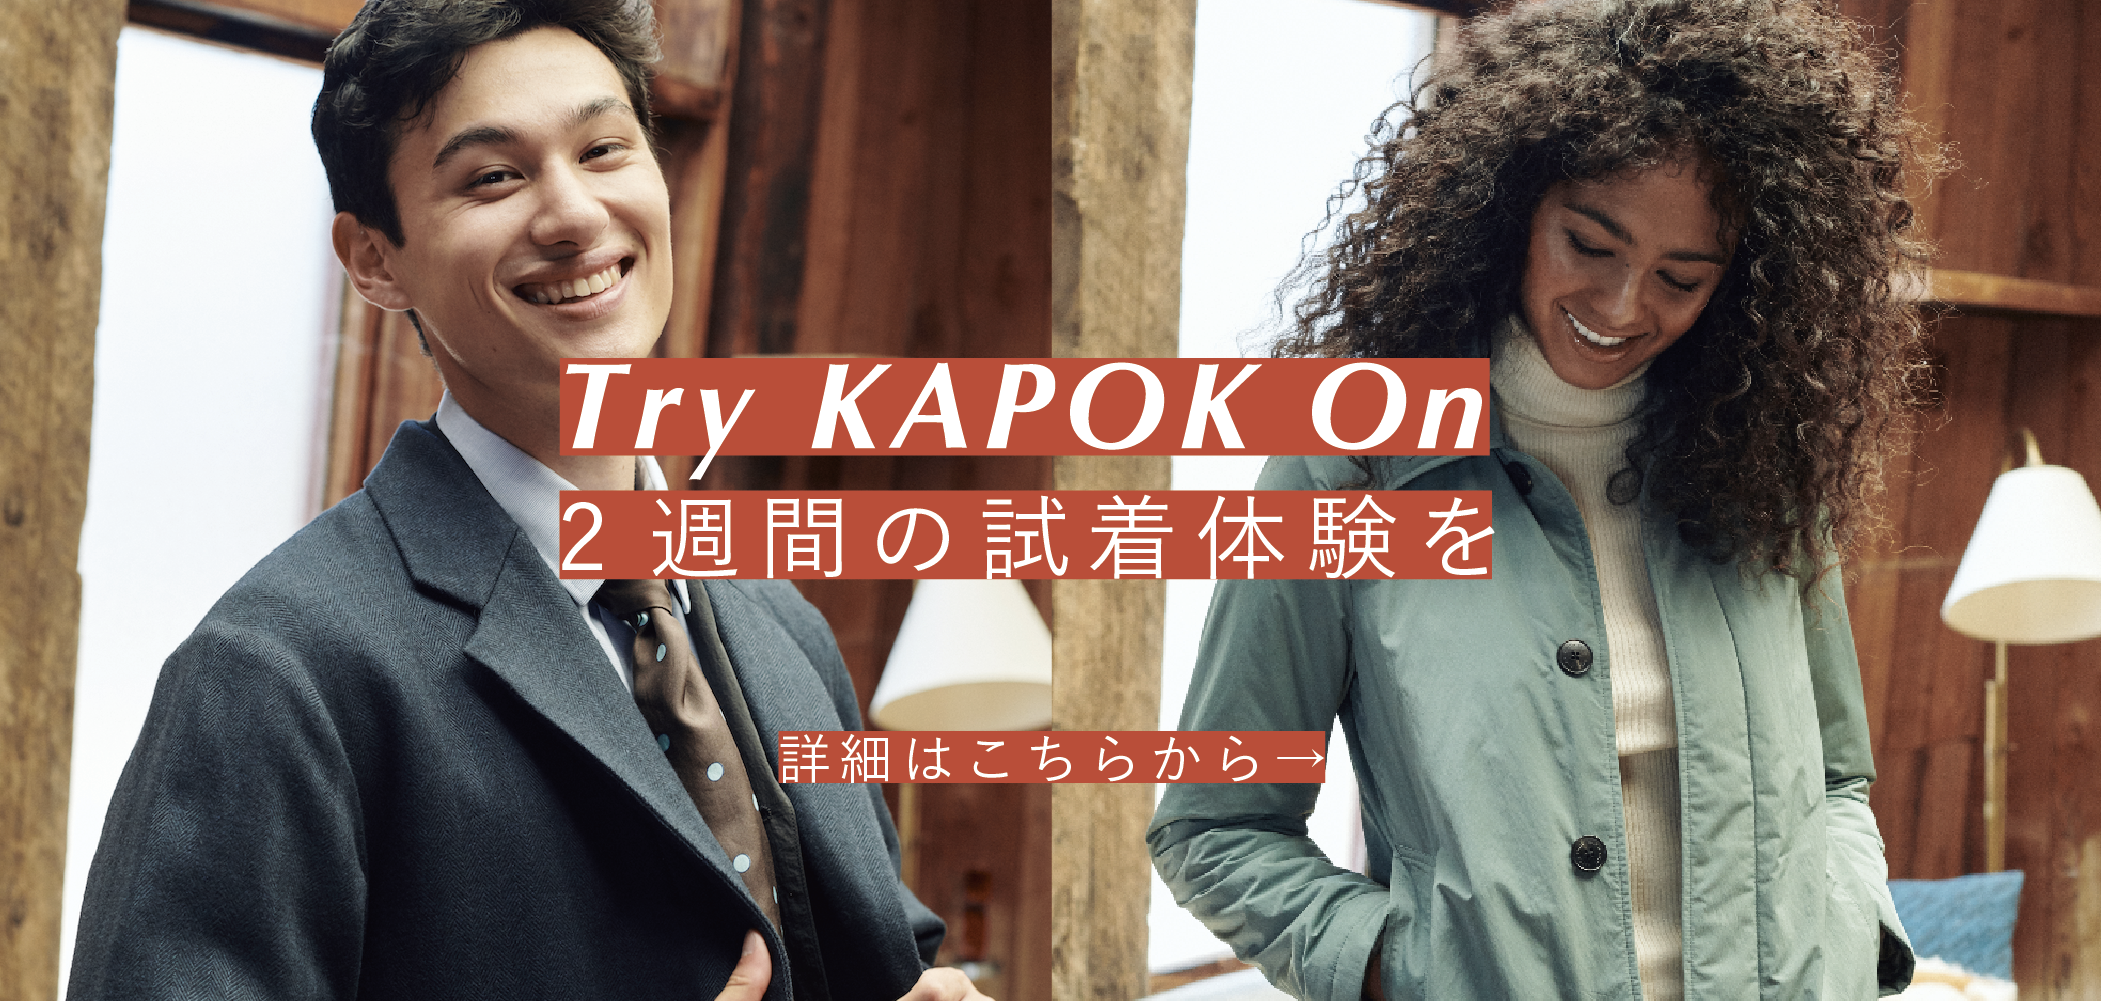 try kapok banner image